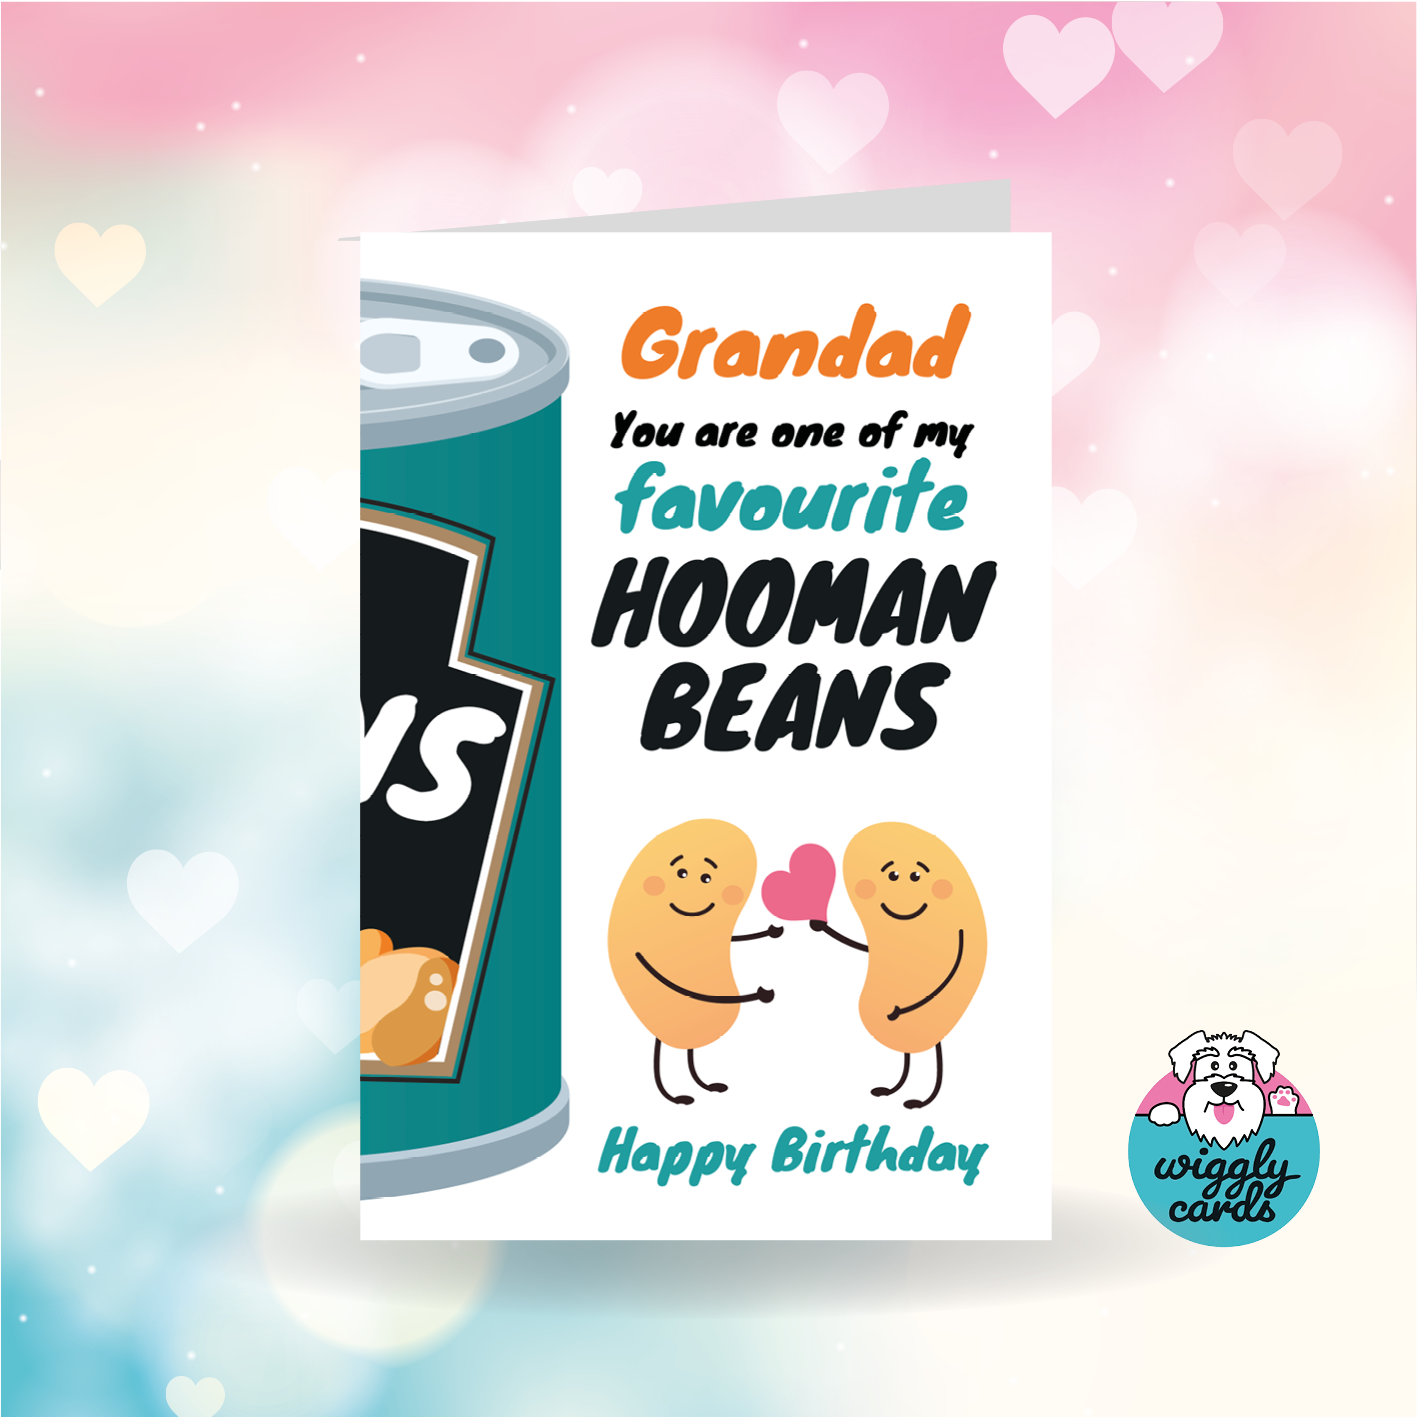 Grandad favourite Hooman Bean birthday card